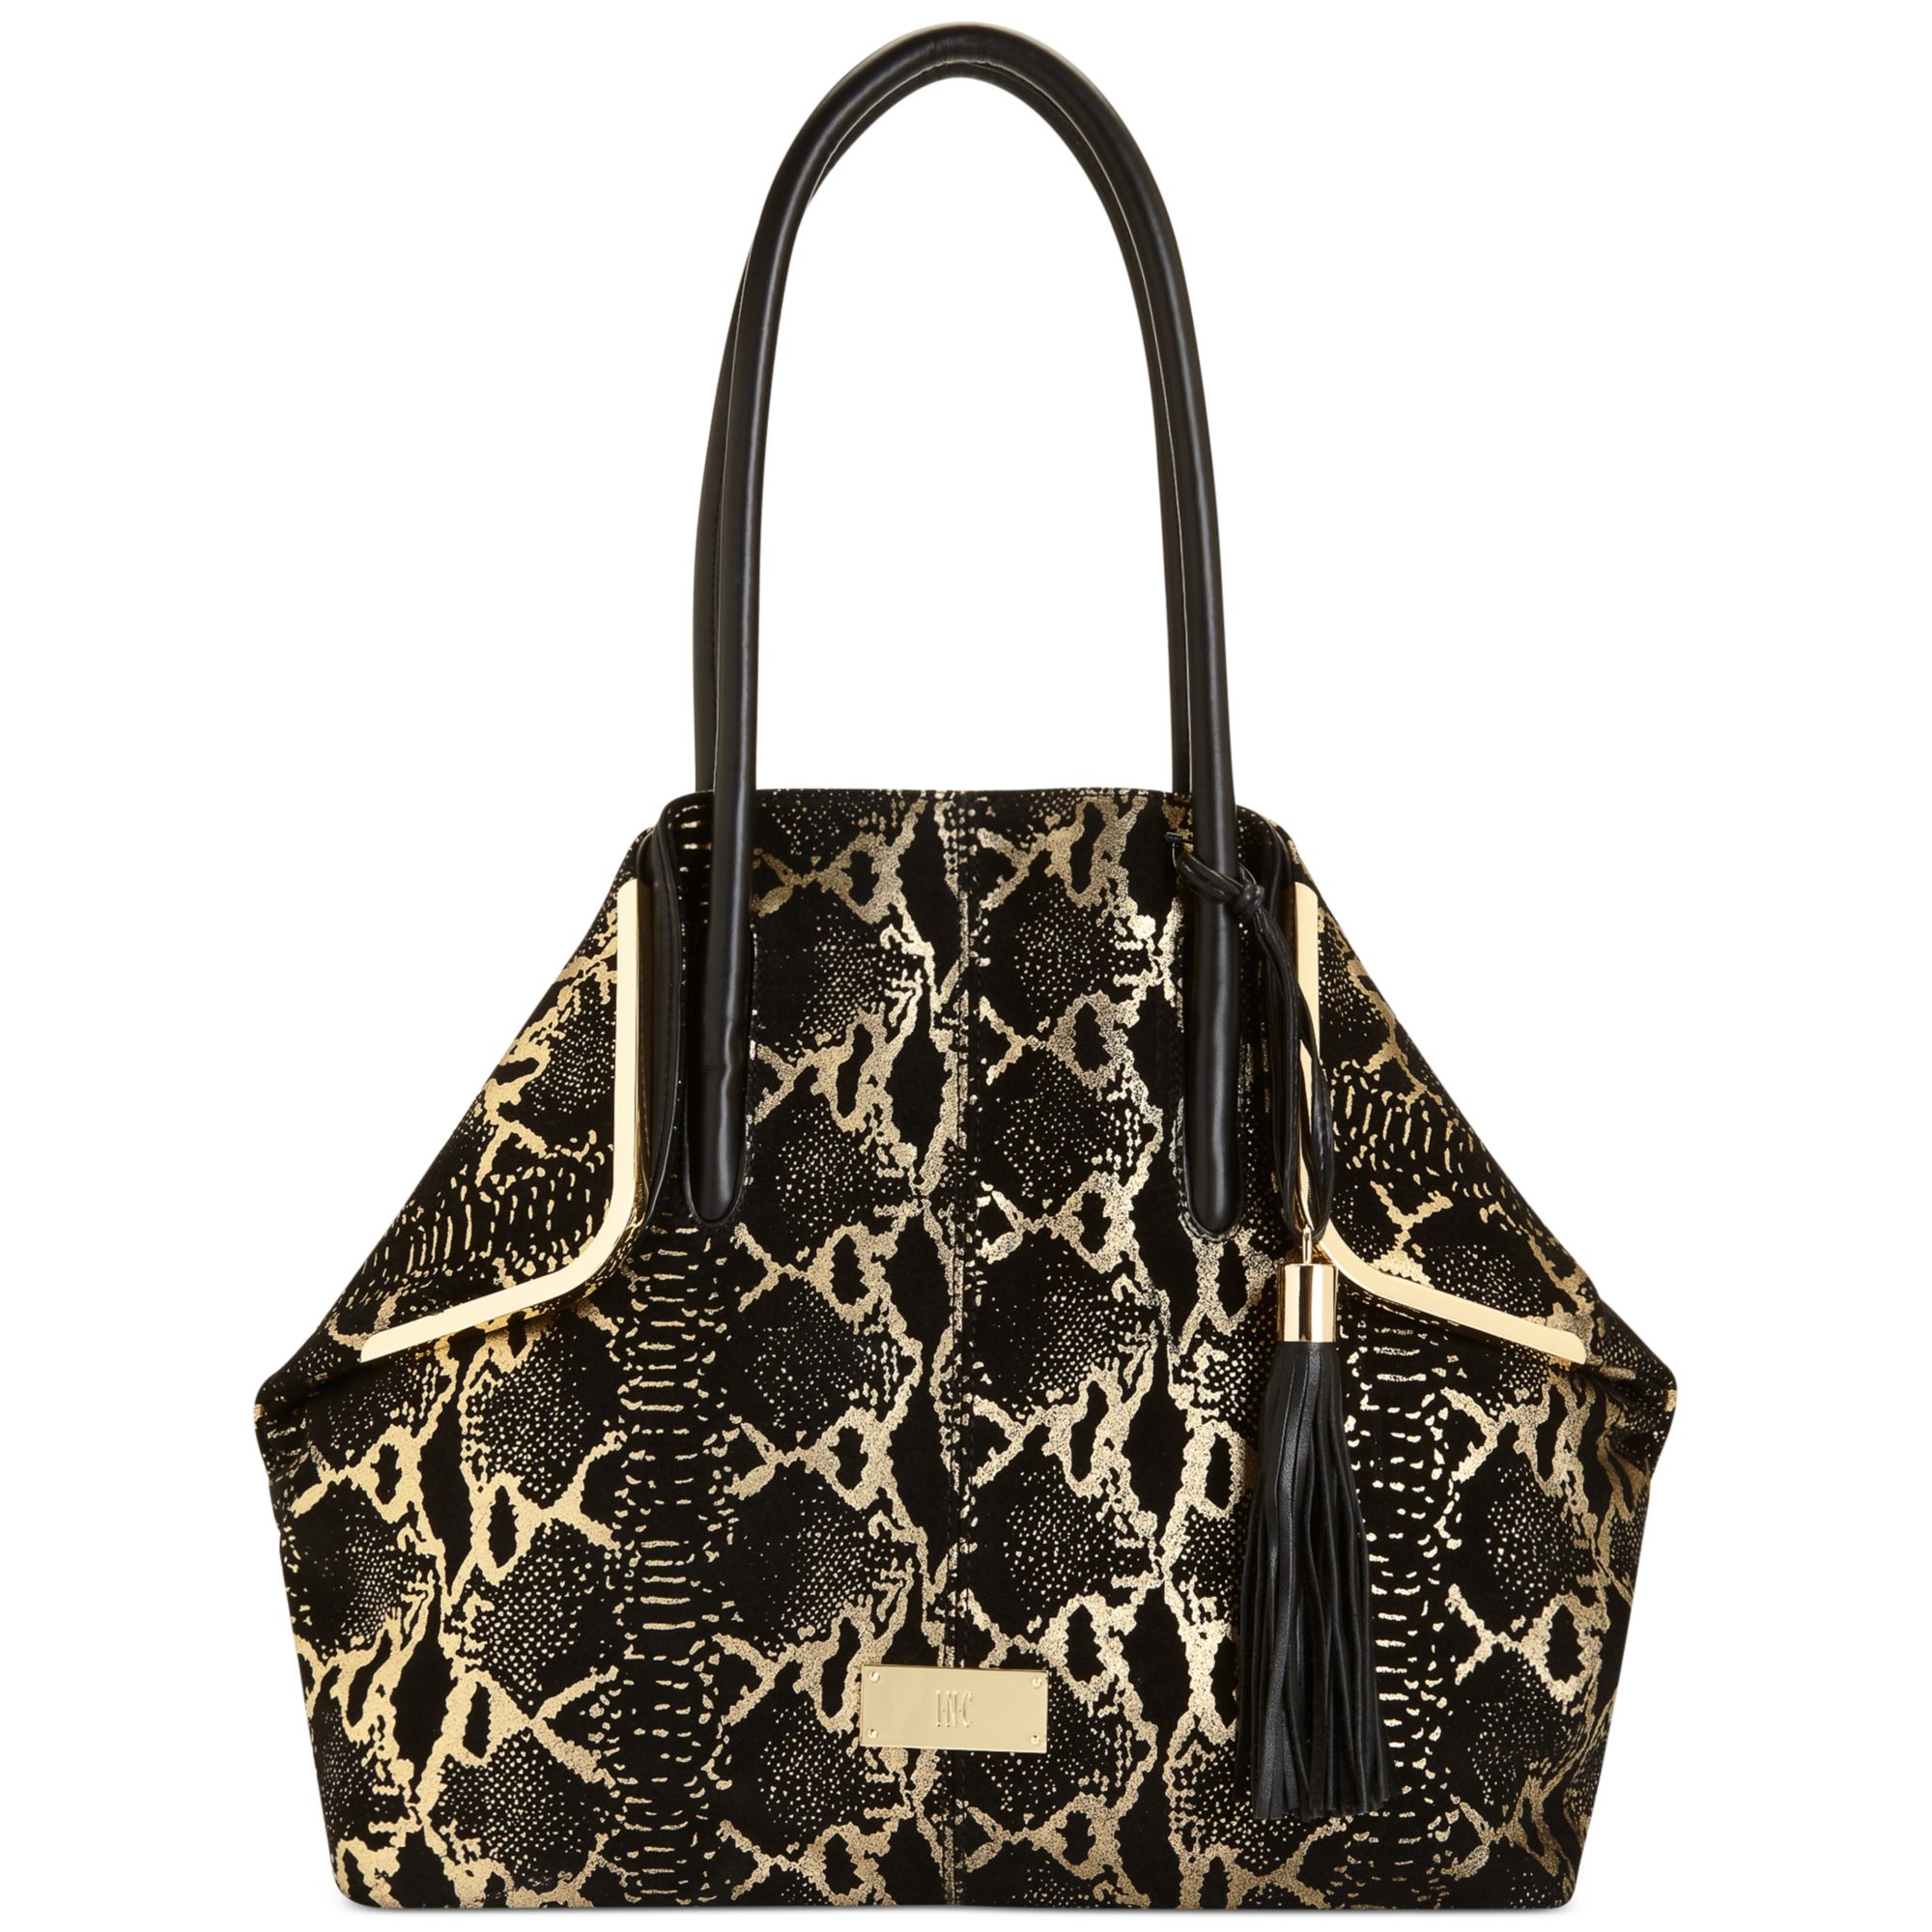 Inc International Concepts Inc Handbag Bianca Suede Tote in Black (Black/ Gold Snake) | Lyst